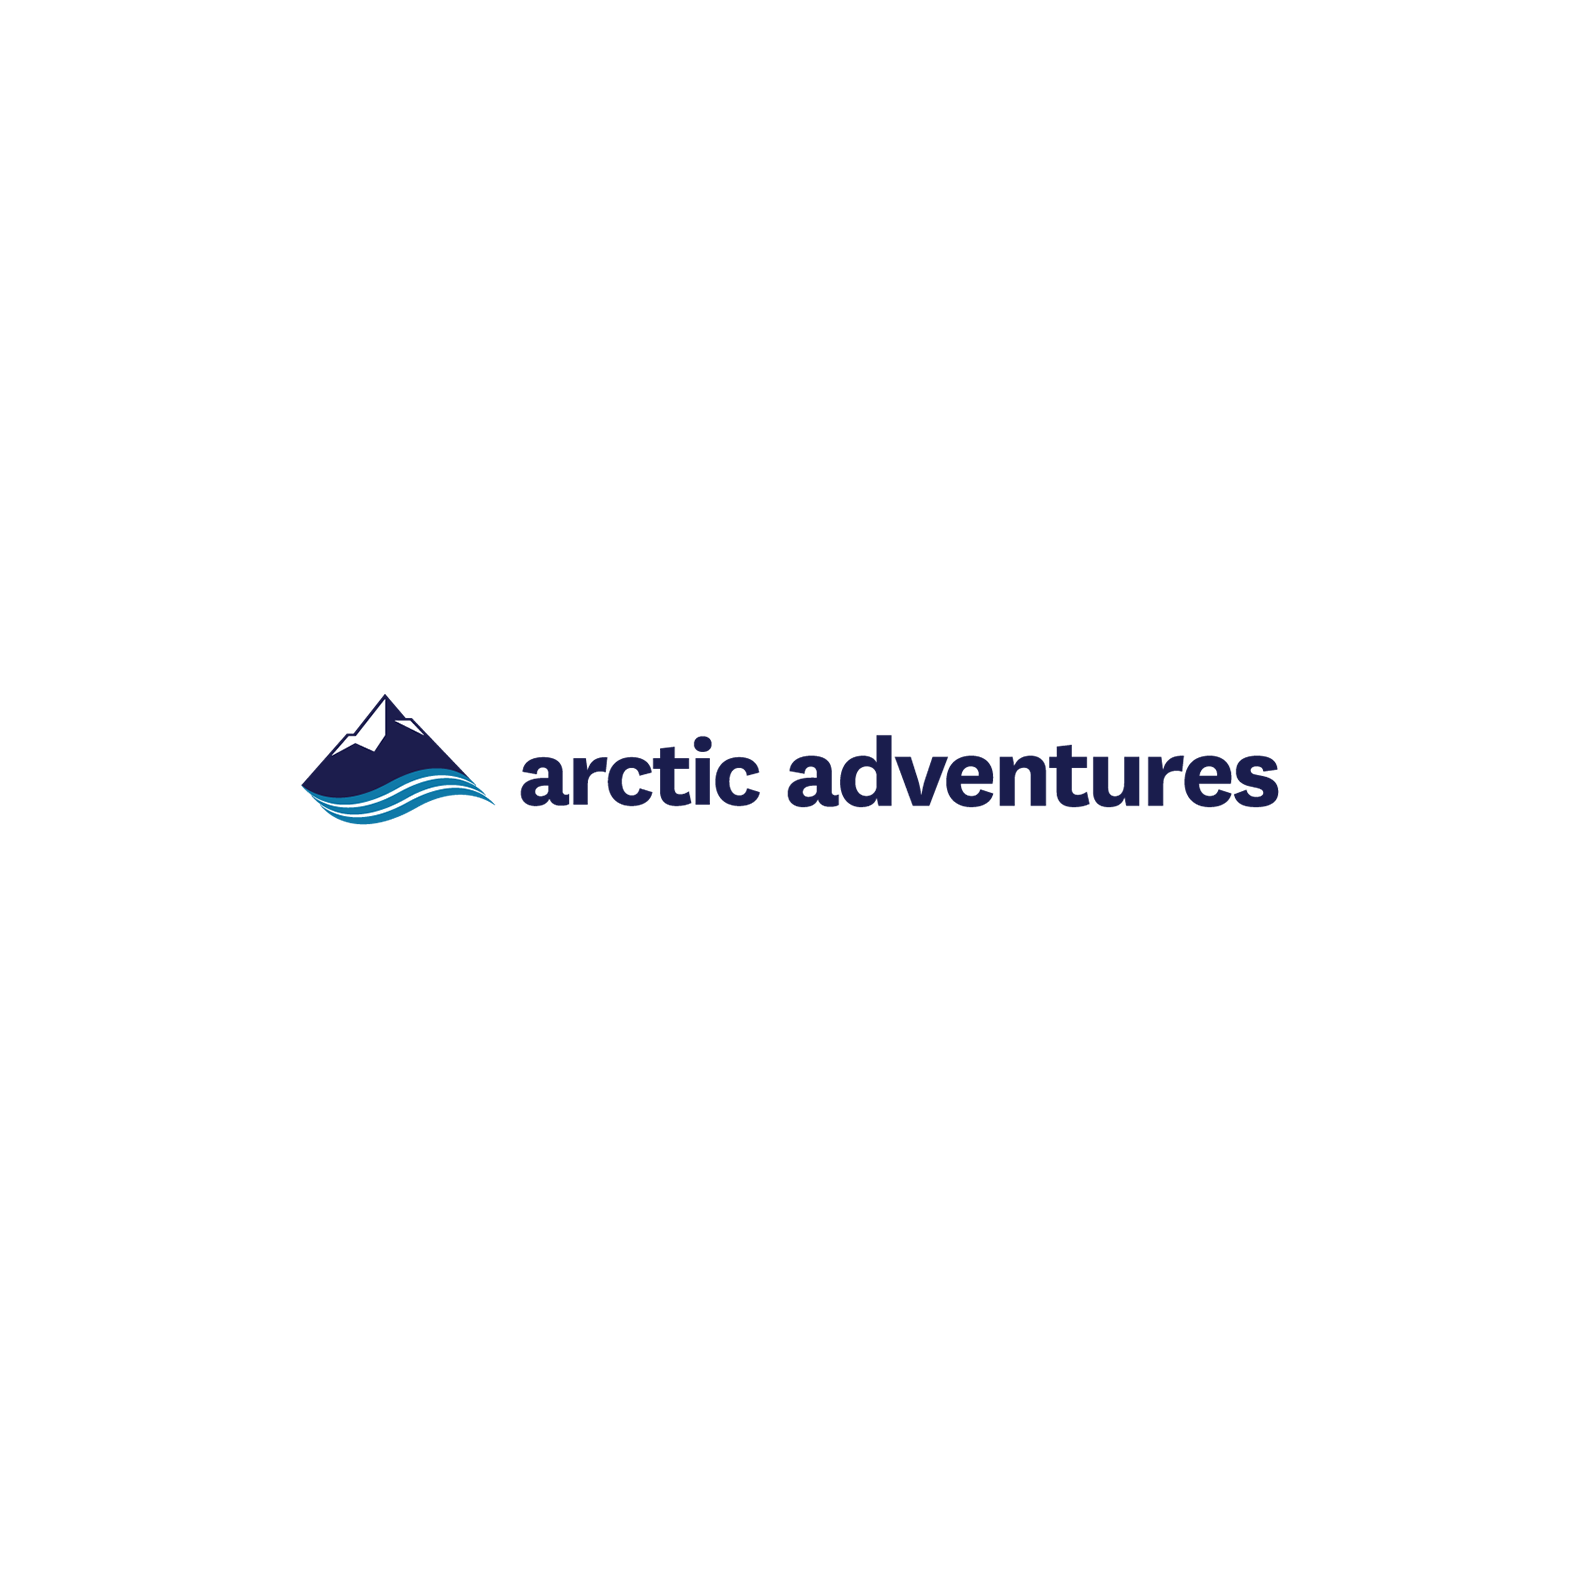 File:Mattel adventure park logo.png - Wikipedia